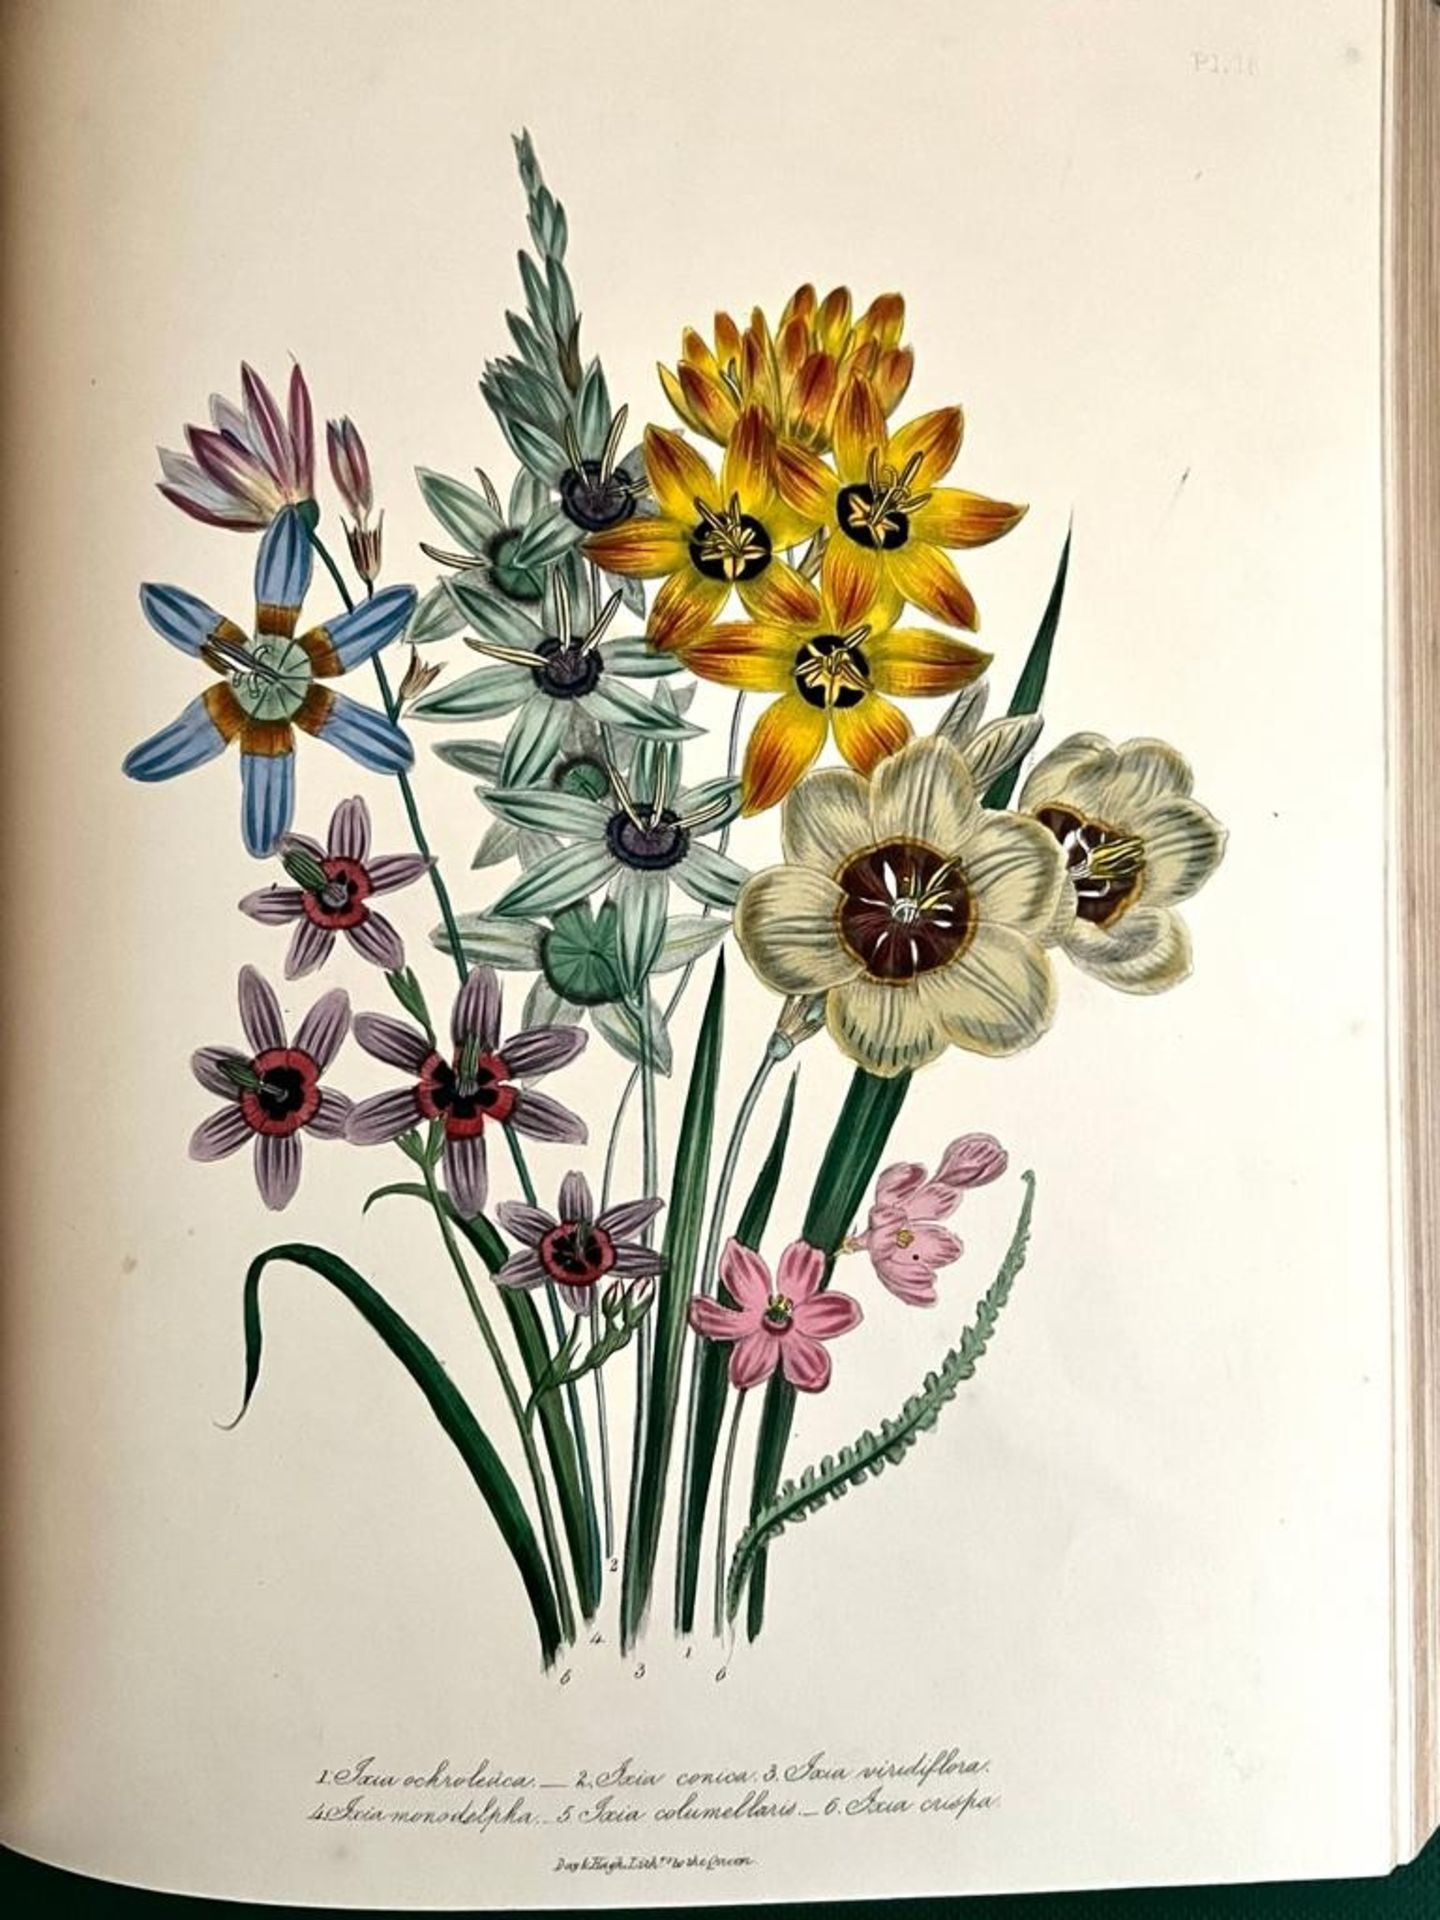 MRS JANE LOUDON, 'THE LADIES FLOWER GARDEN OF ORNAMENTAL BULBOUS PLANTS', 1841 - Image 7 of 7